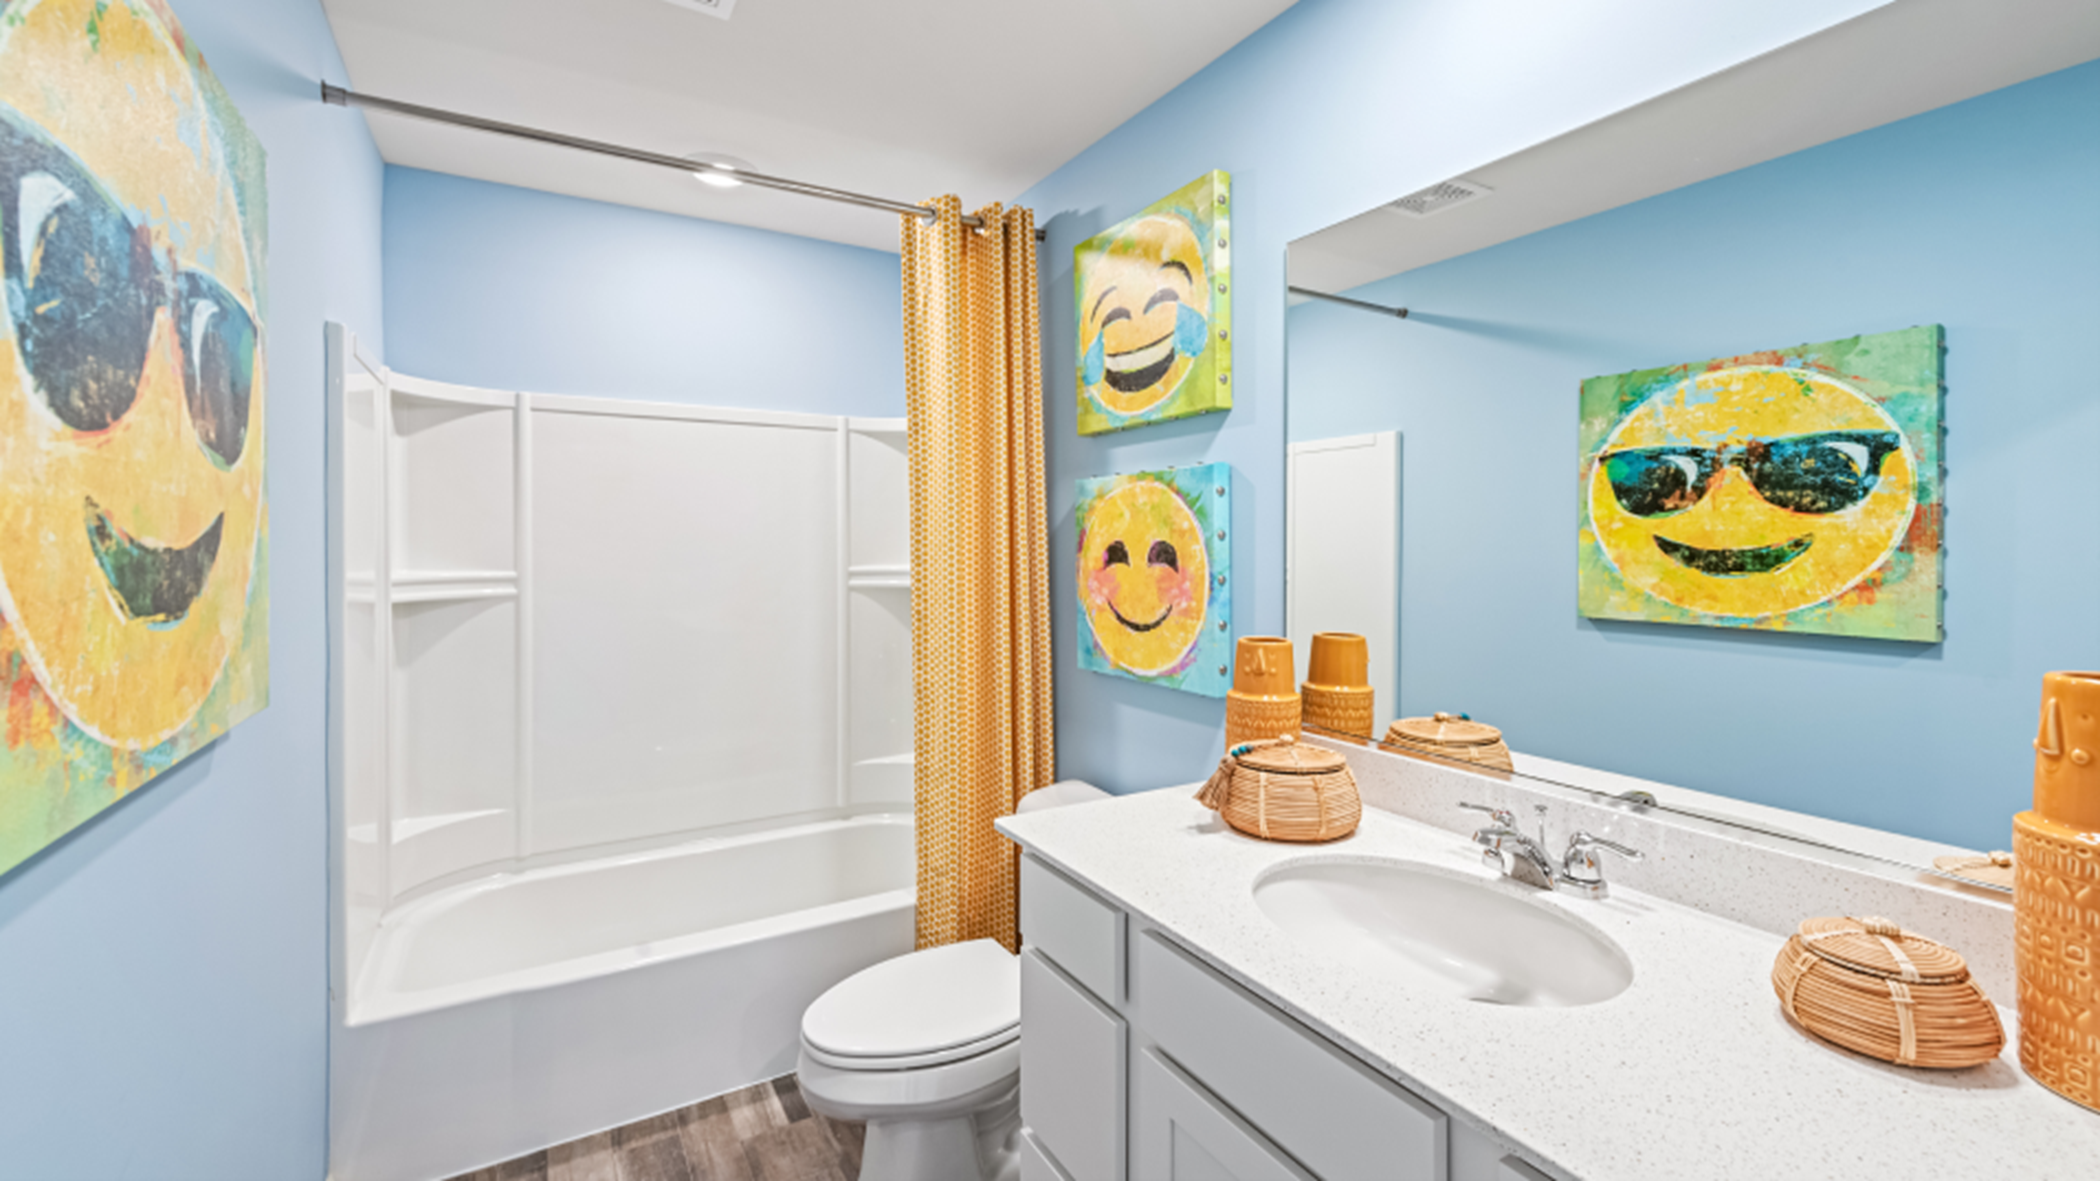 Starling Bathroom Vanity and Shower/Tub